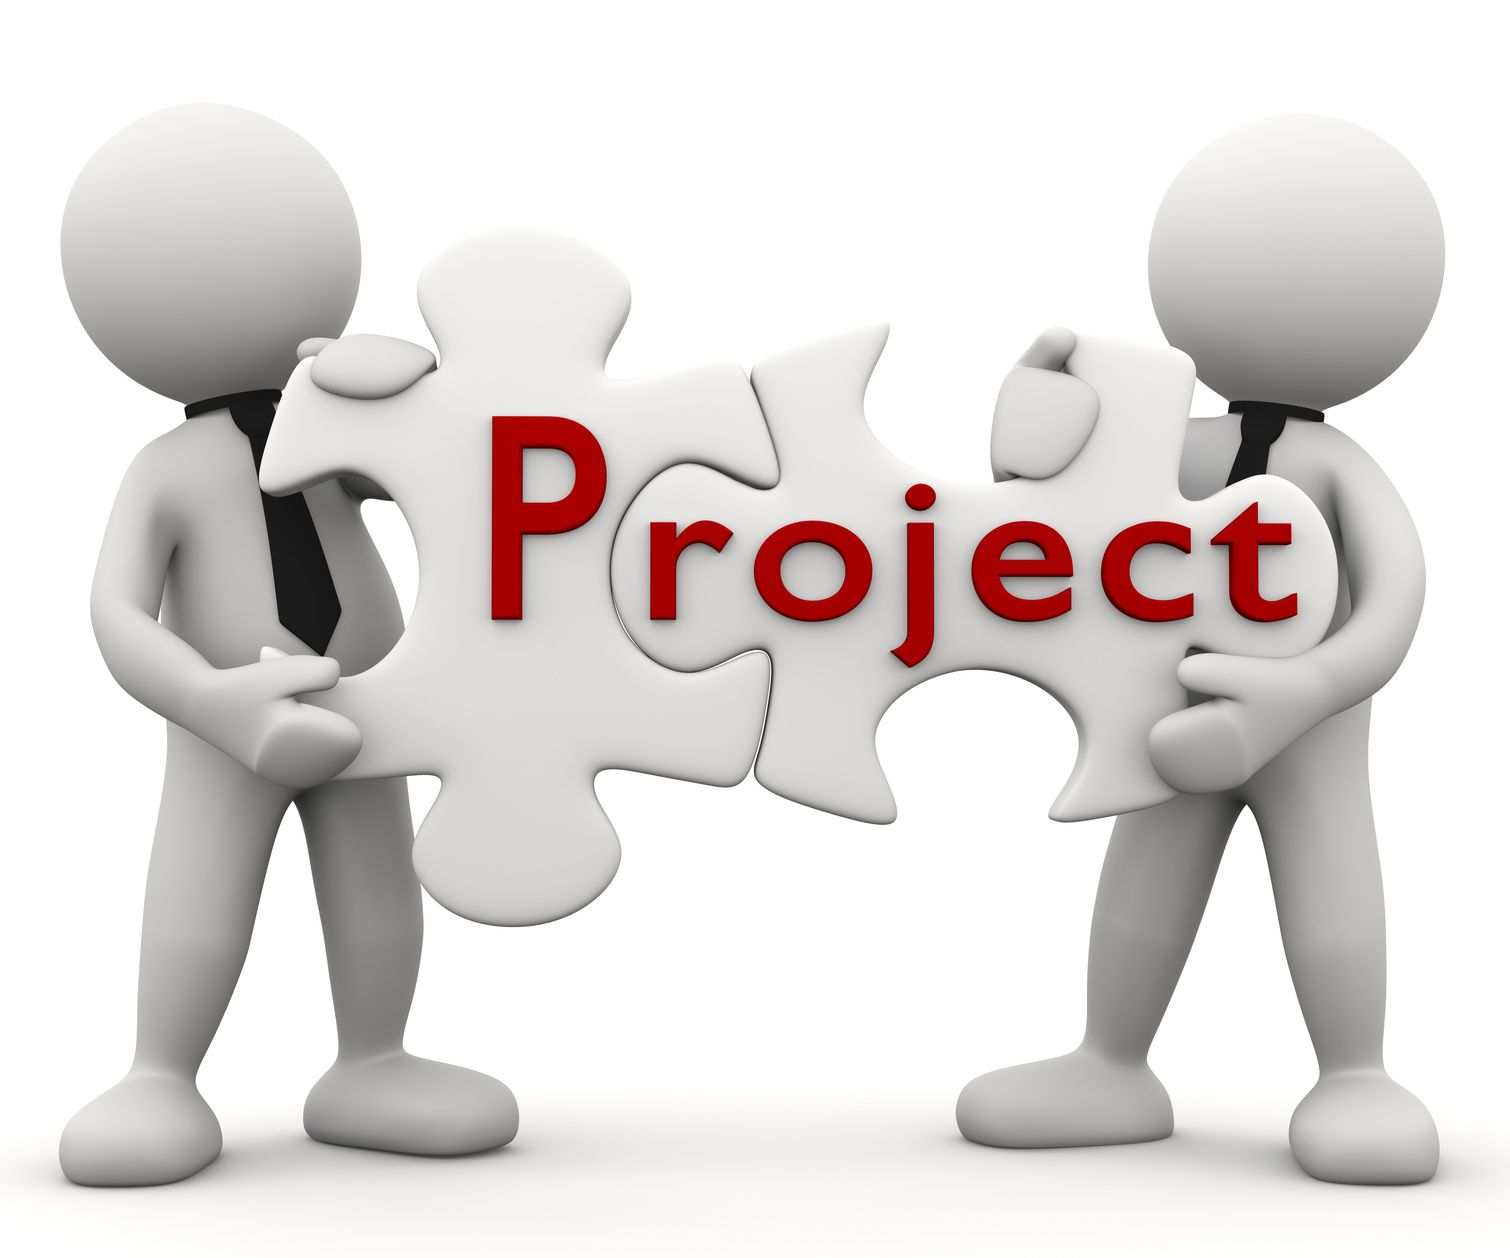 Projektmanagement Und Mindmap Projektmanagement Projekte Projektarbeit